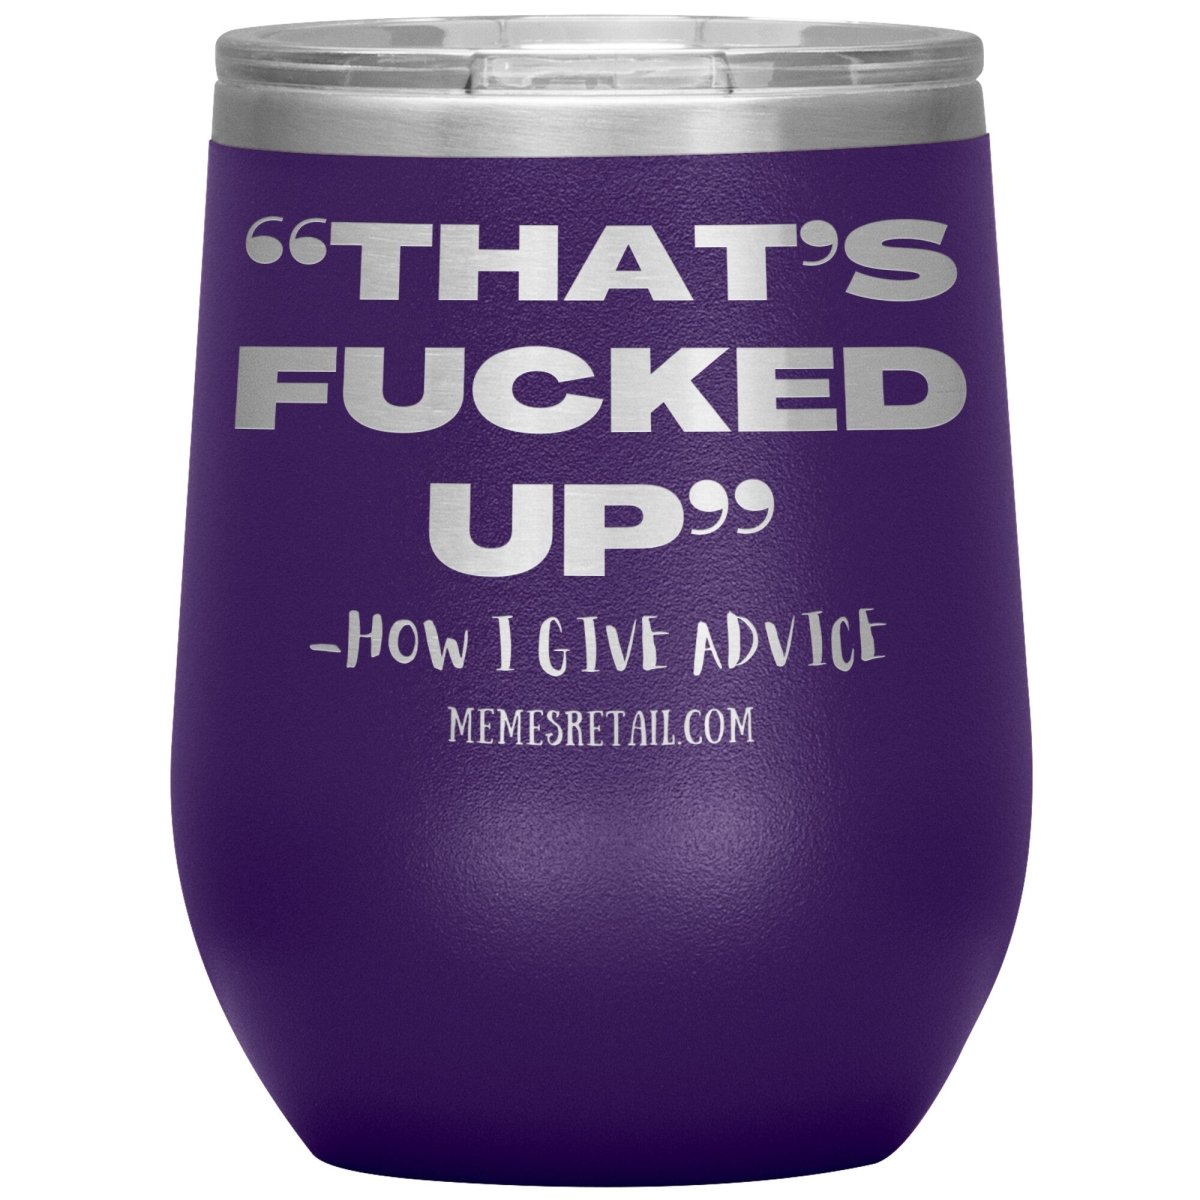 “That’s Fucked Up” -how I give advice Tumblers, 12oz Wine Insulated Tumbler / Purple - MemesRetail.com